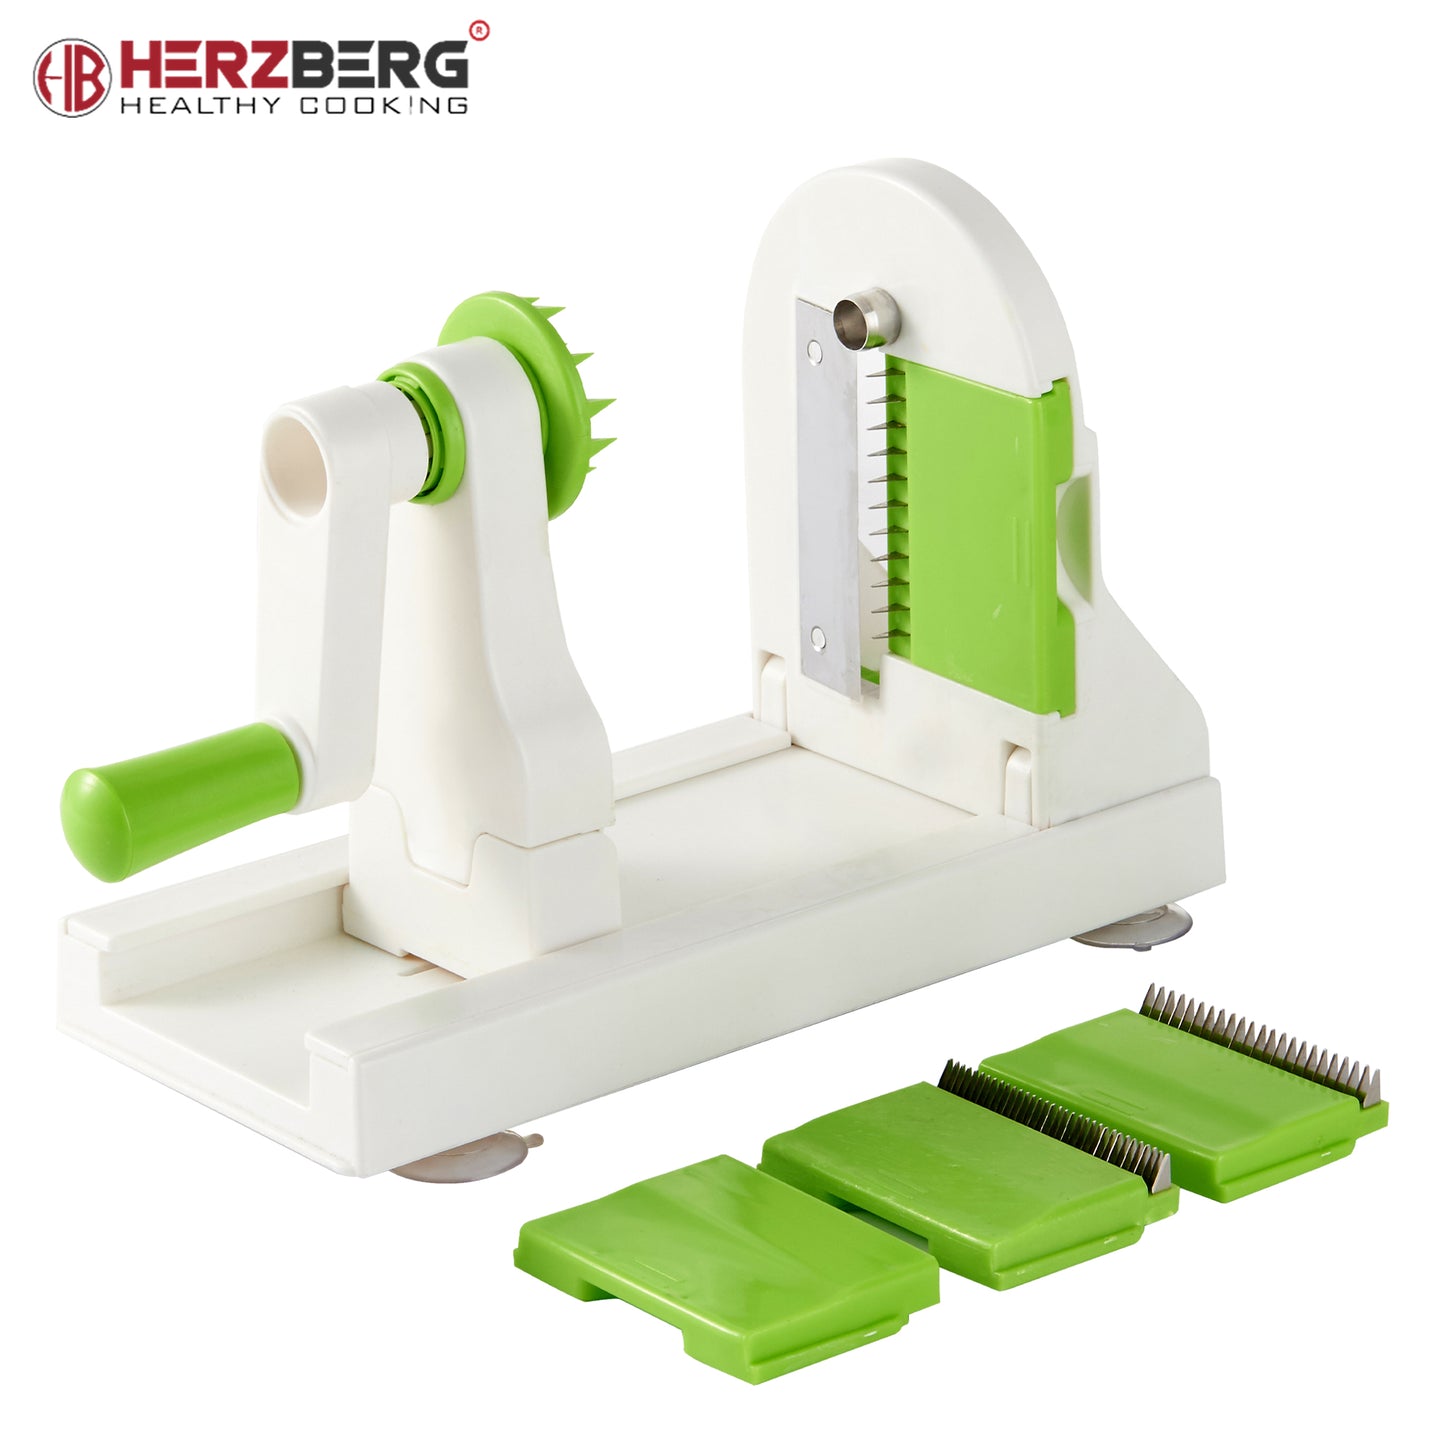 Herzberg HG-8030: Vegetable Spiralizer Set